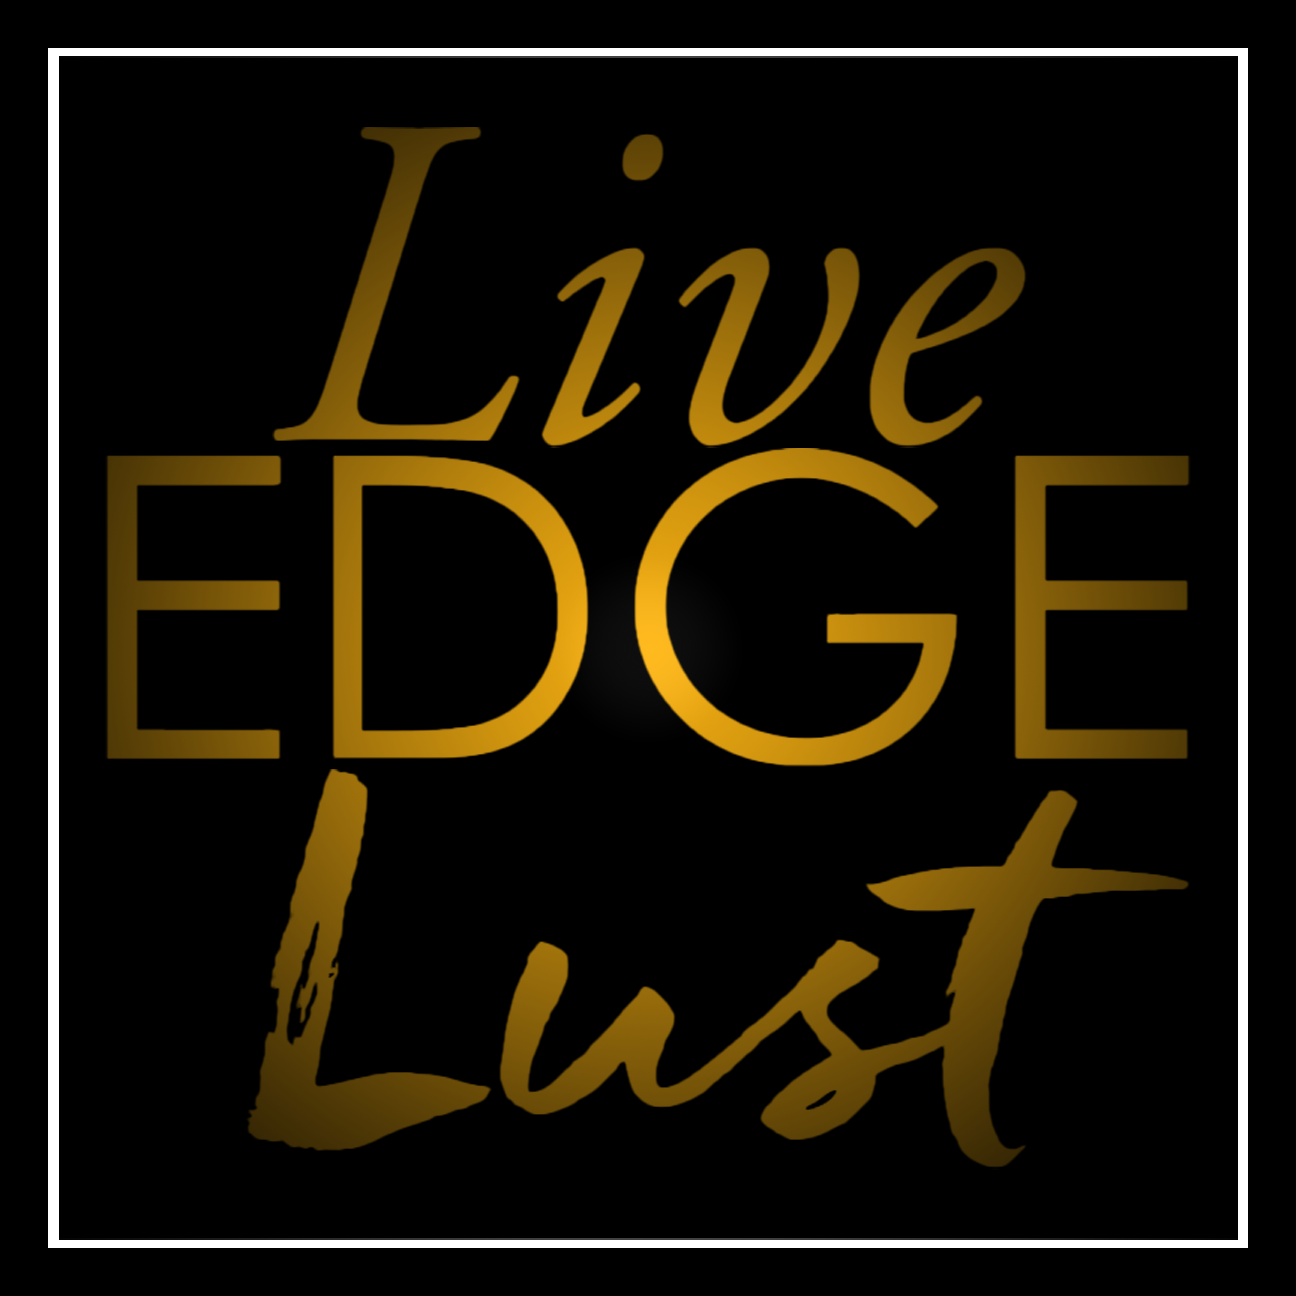 Live Edge Lust